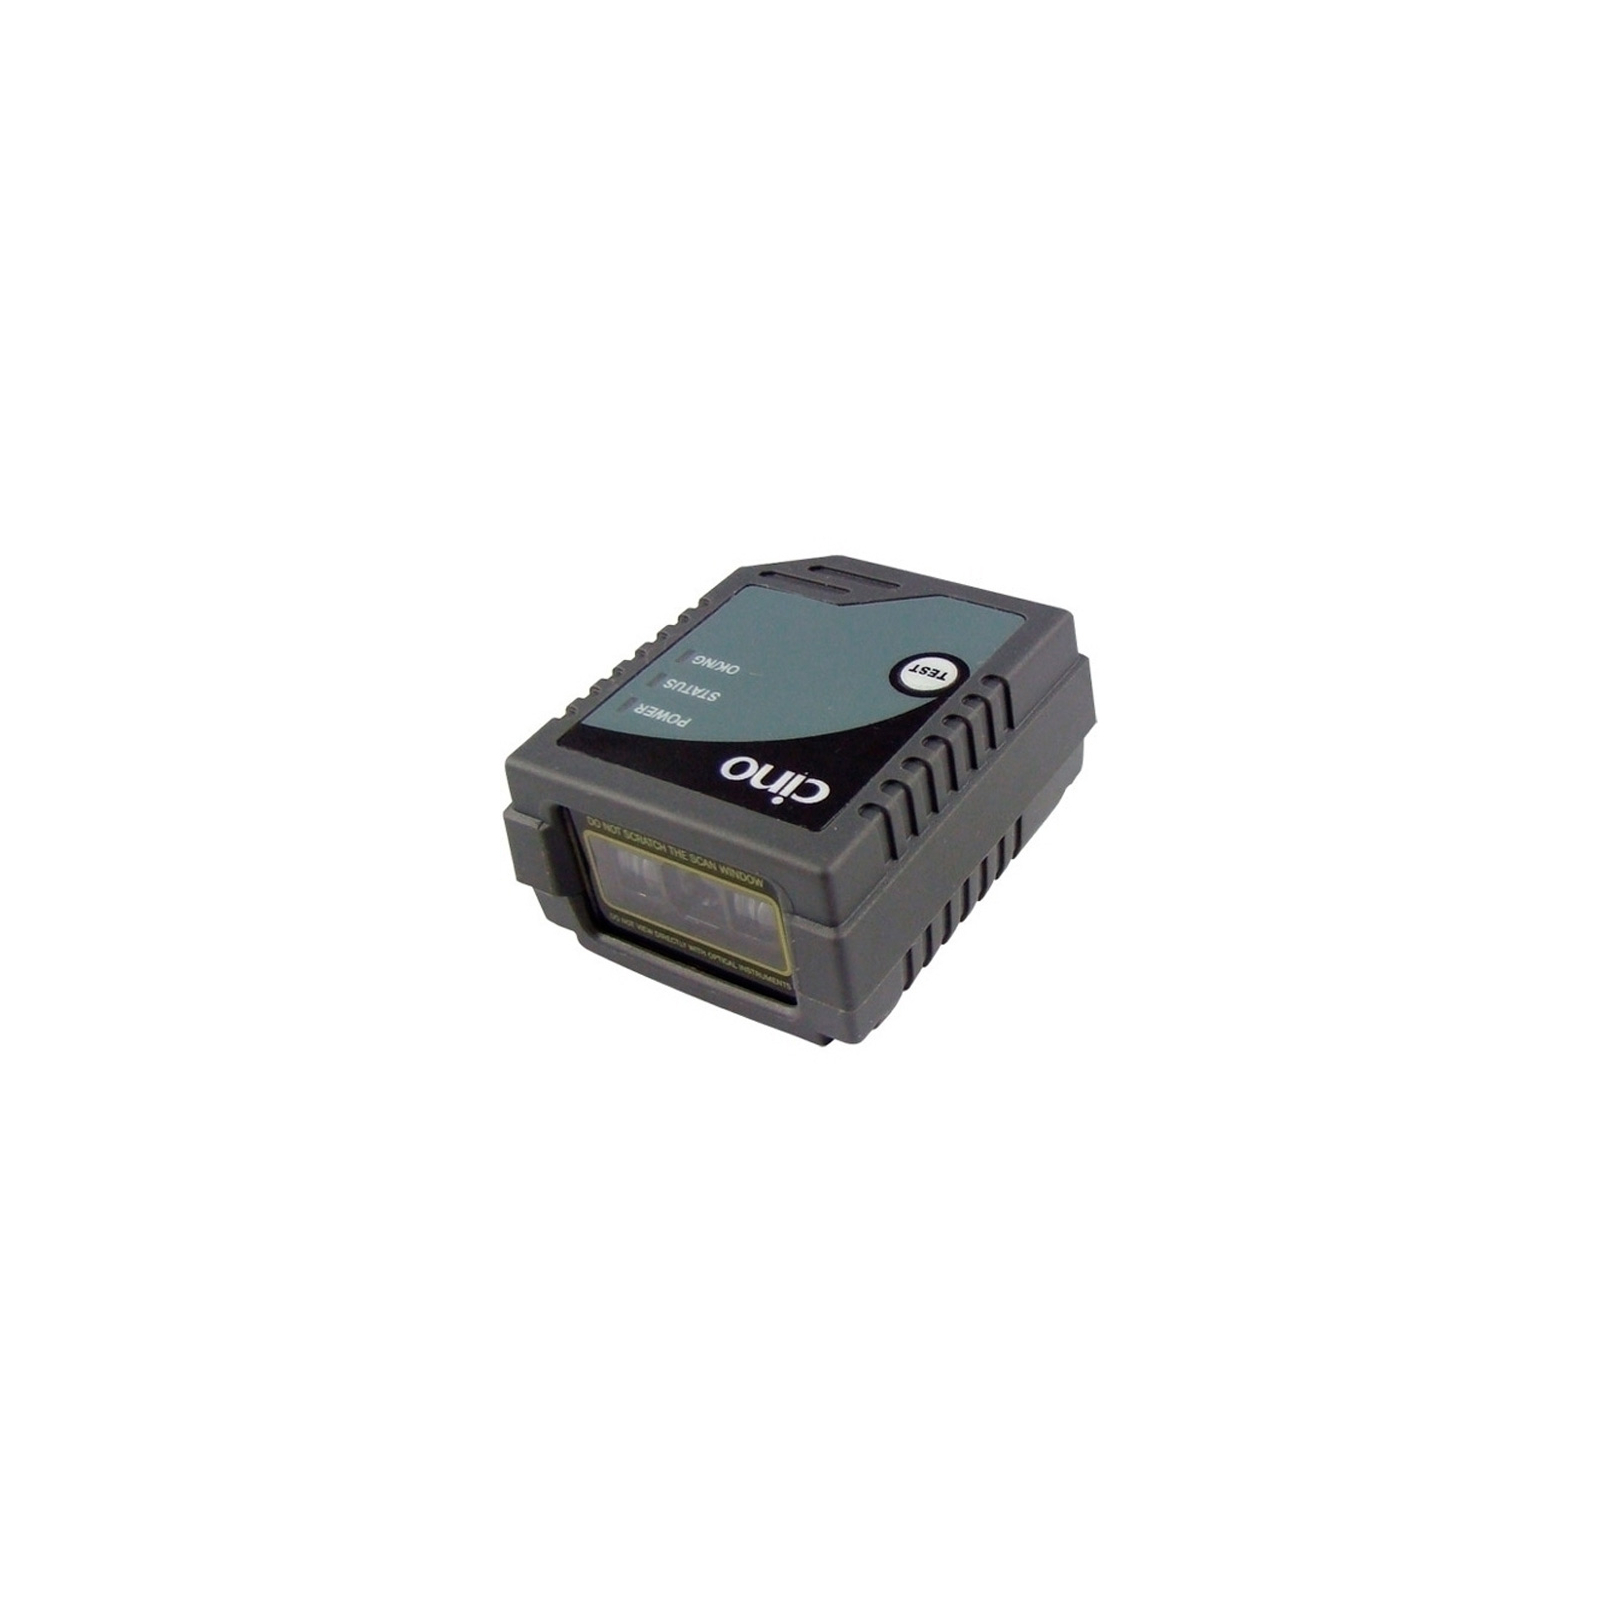 Сканер штрих-кода Cino FM480-11F USB (1D) (9612)